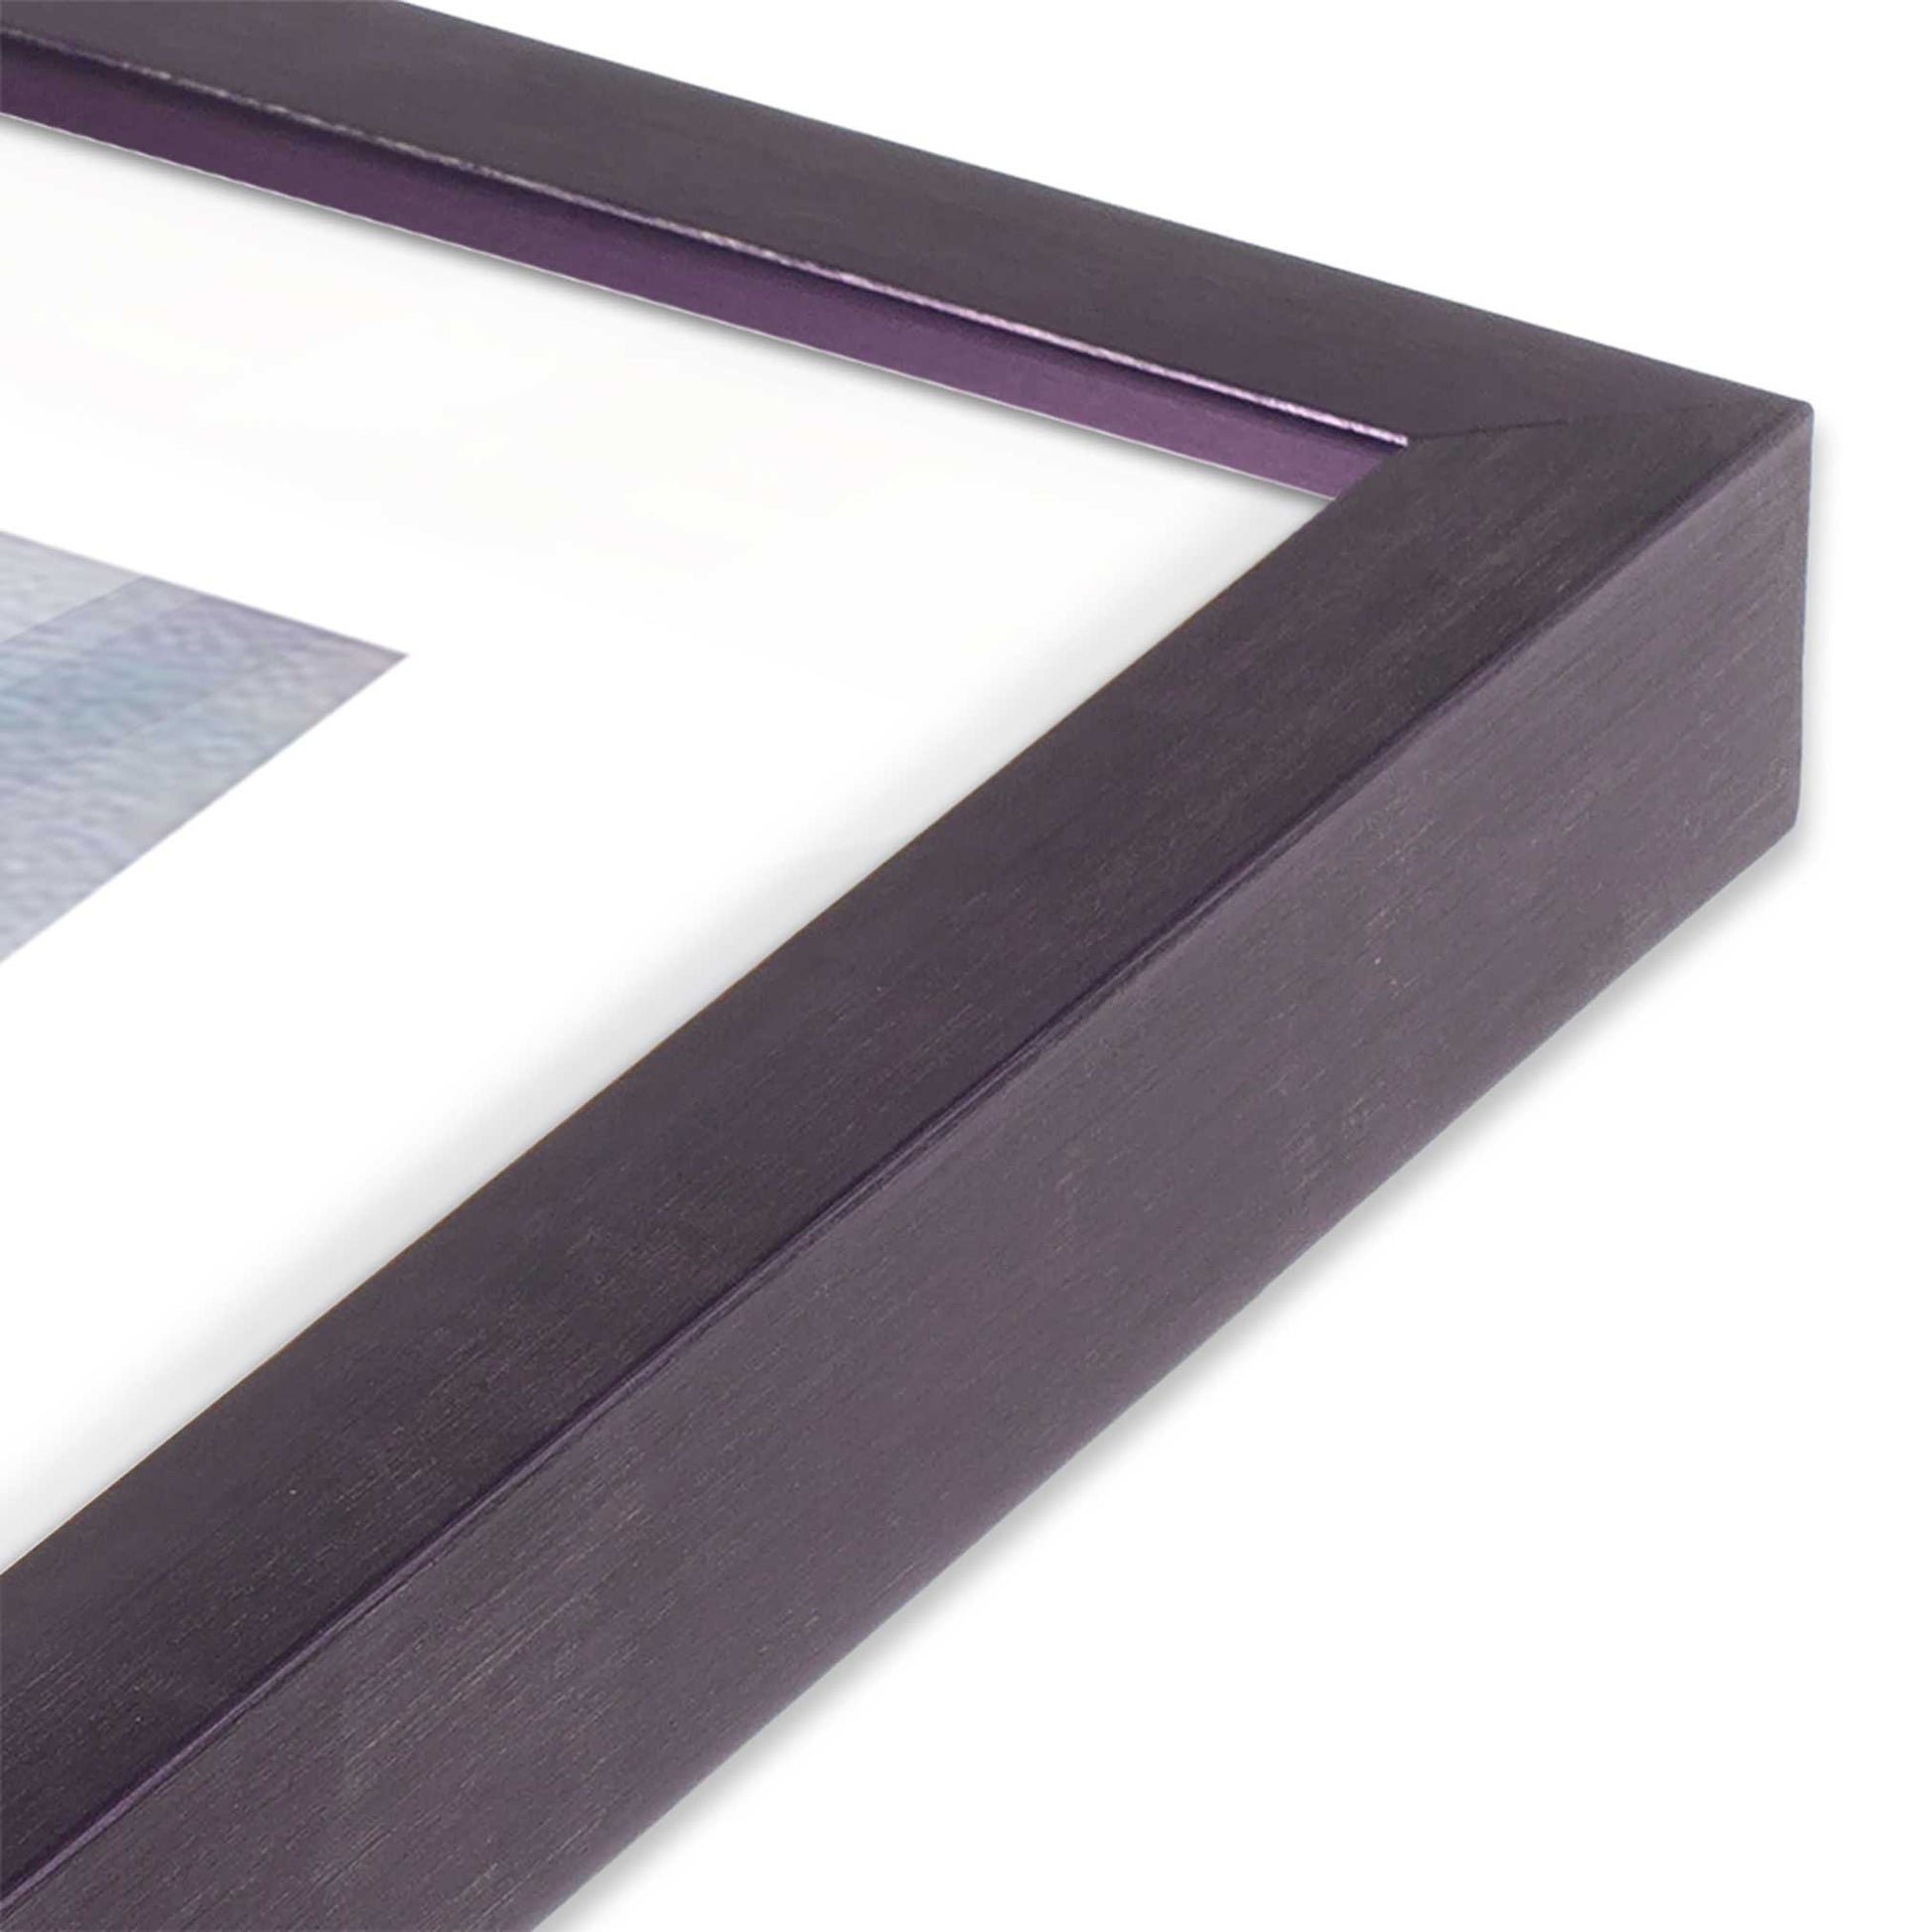 [Color:Purple Iris], Picture of the corner of the art